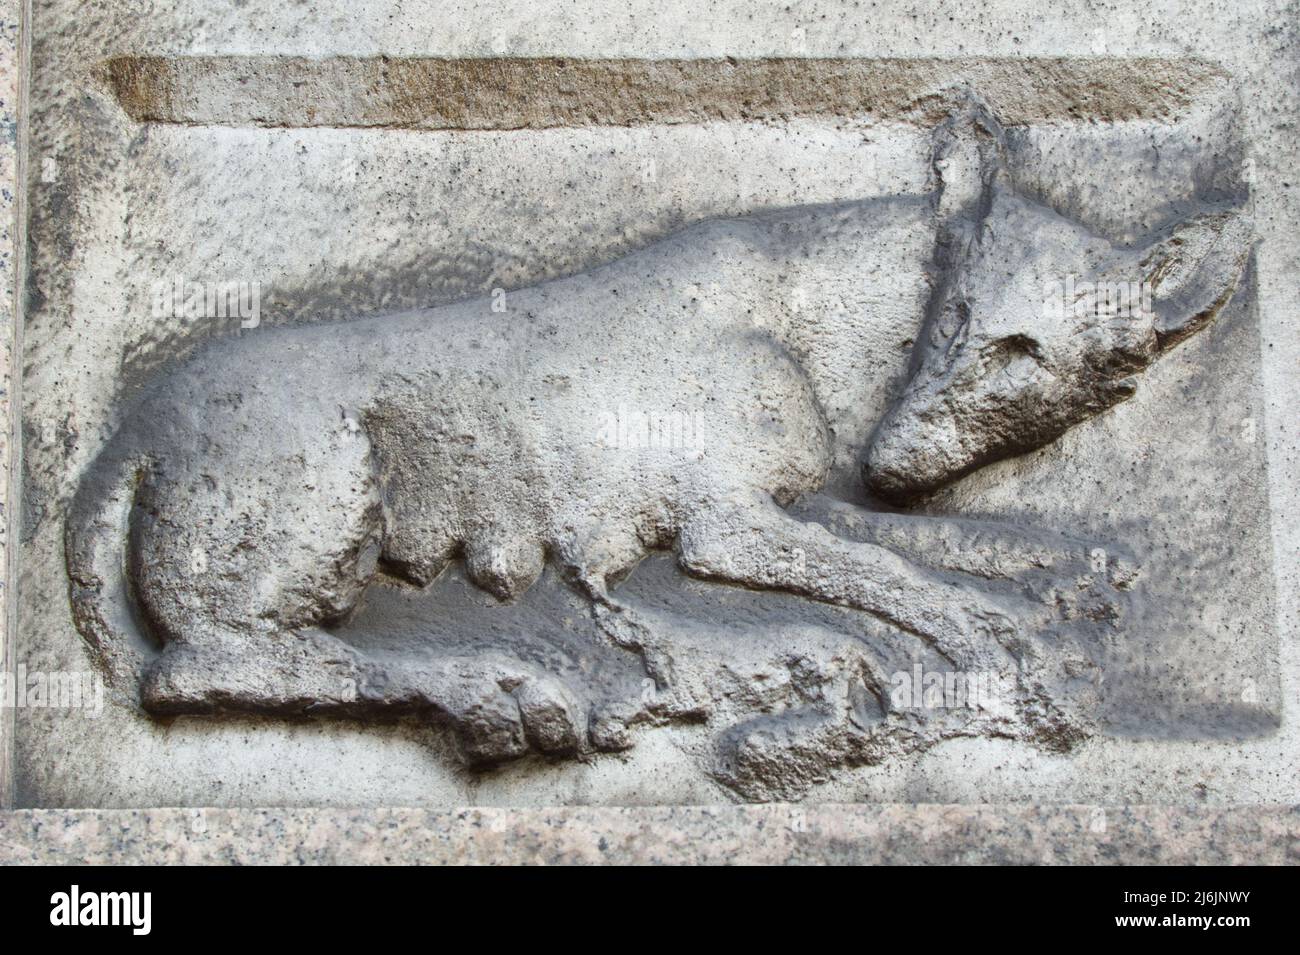 She wolf - ancient pagan symbol - bas-relief - corso Venezia - Milan Stock Photo